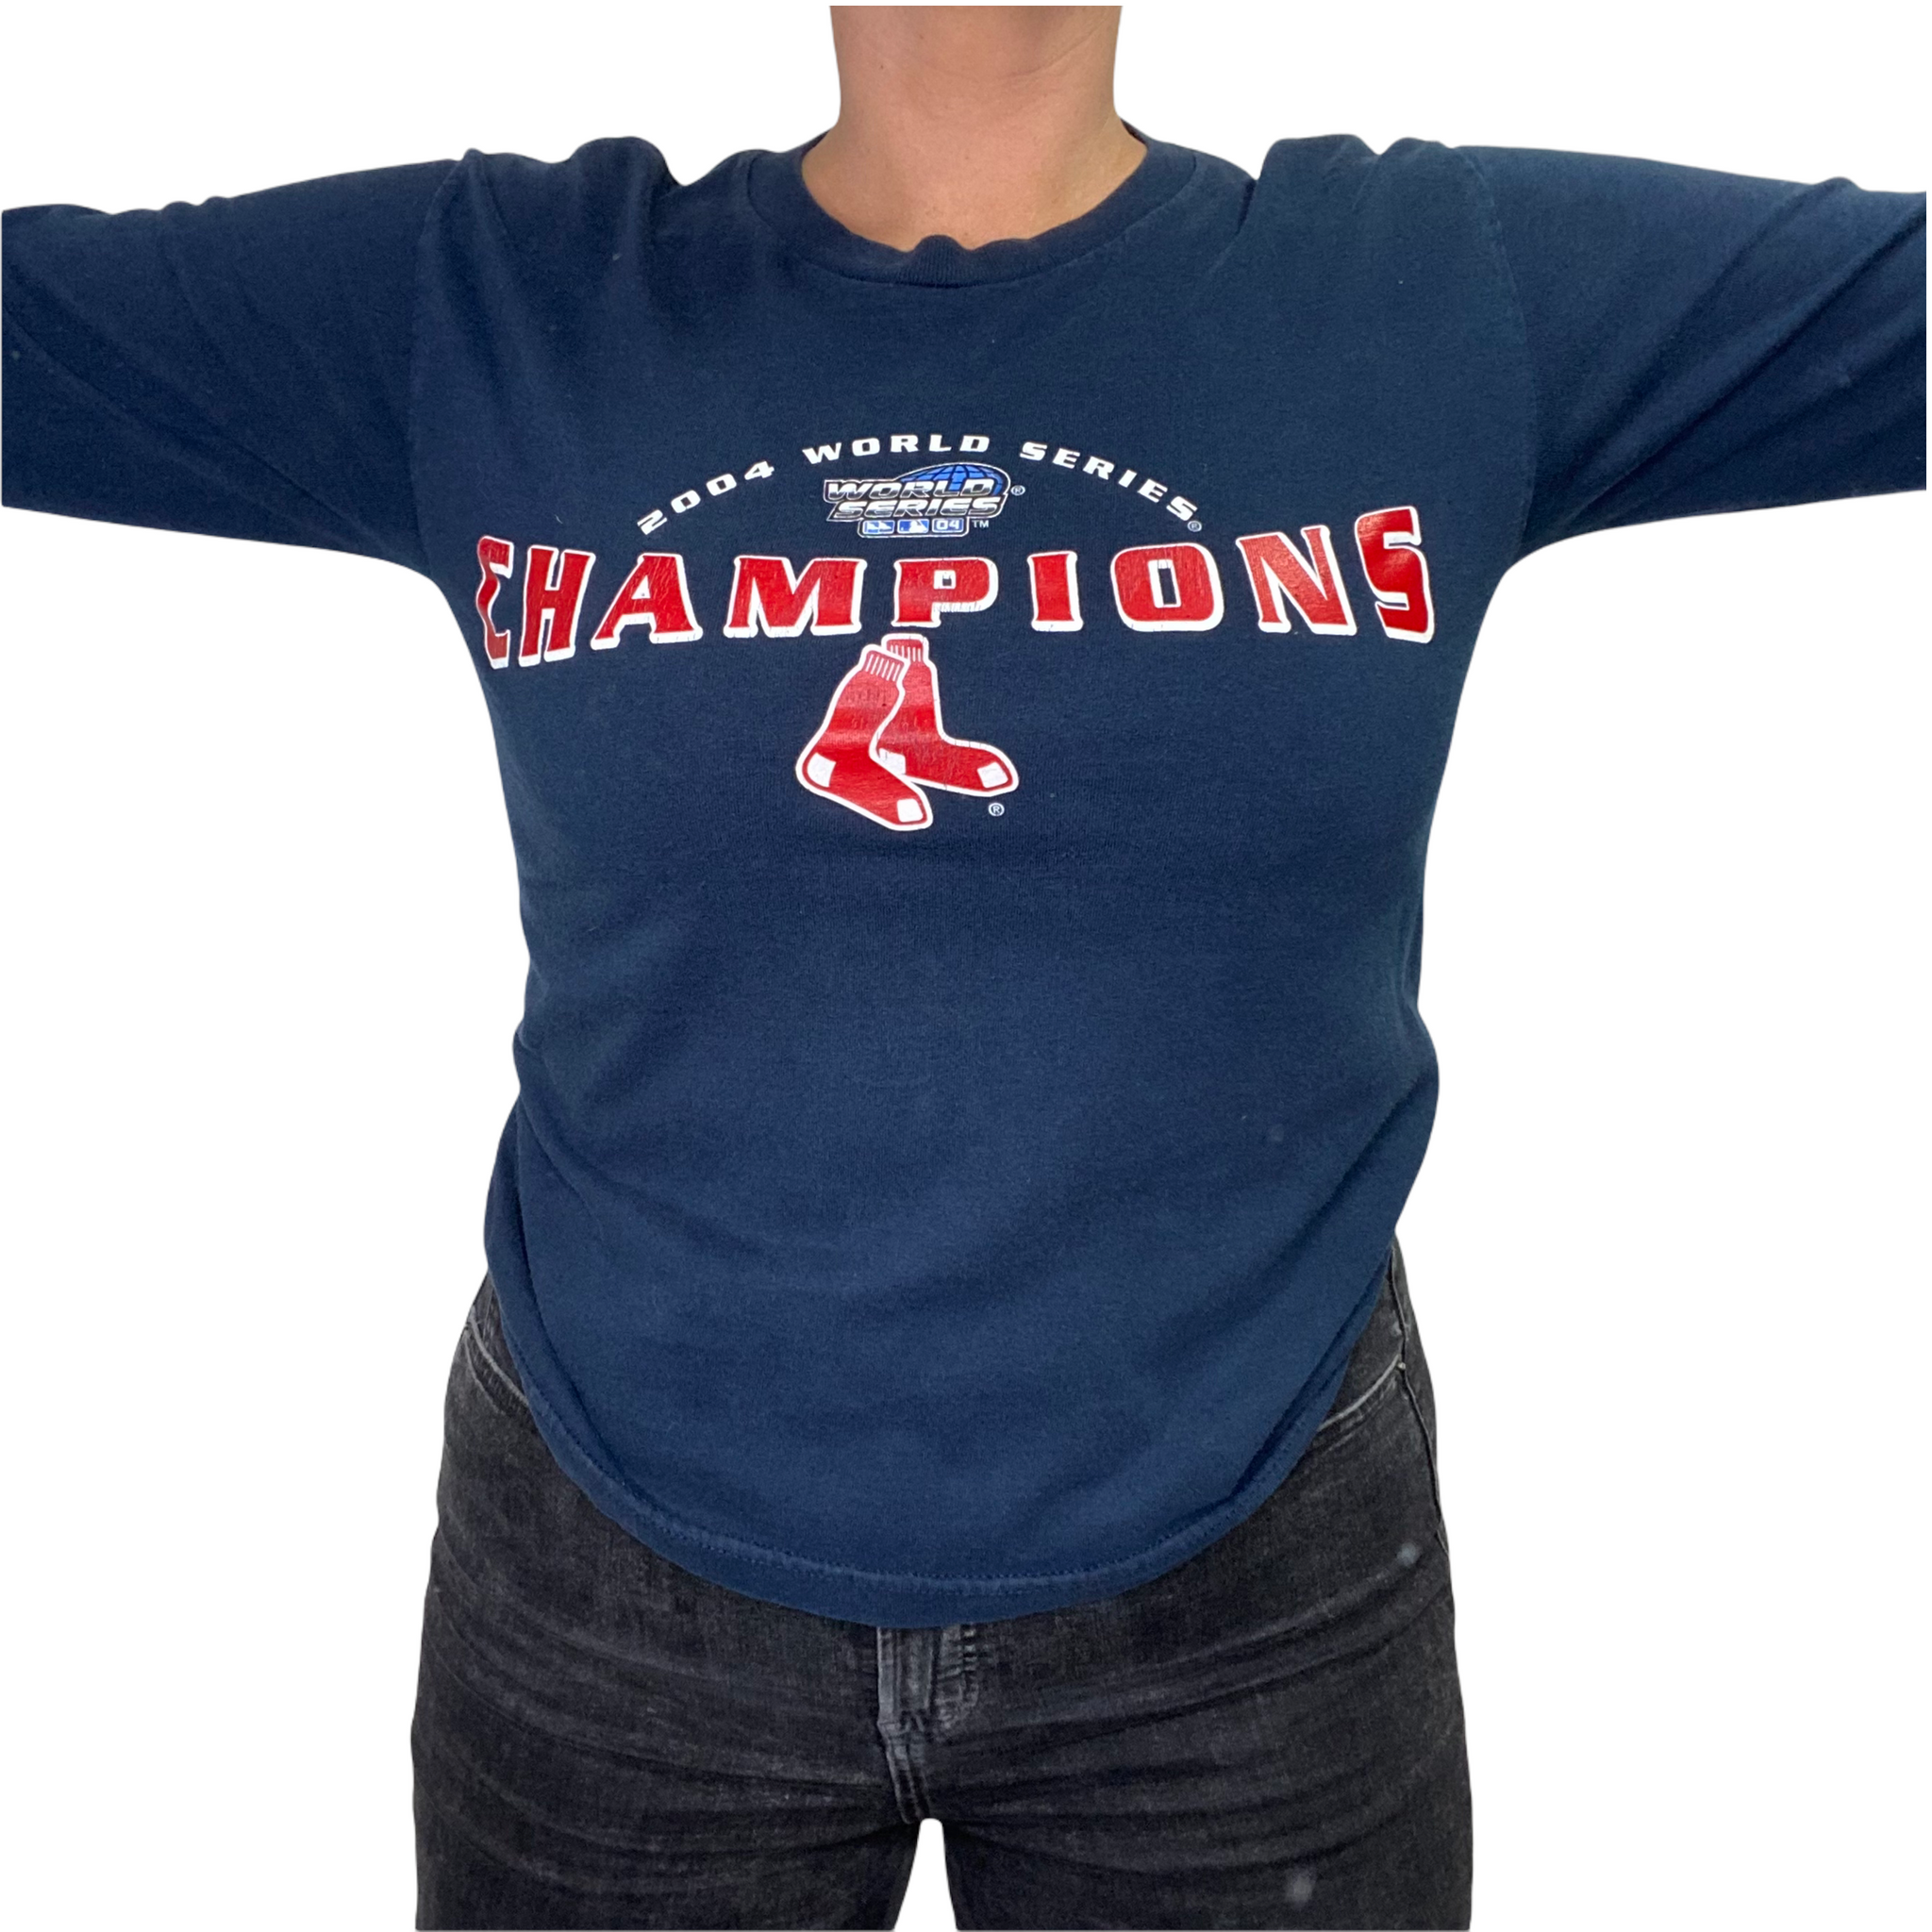 Gildan Heavy 2004 Boston Red Sox World Champions Caricature T-Shirt